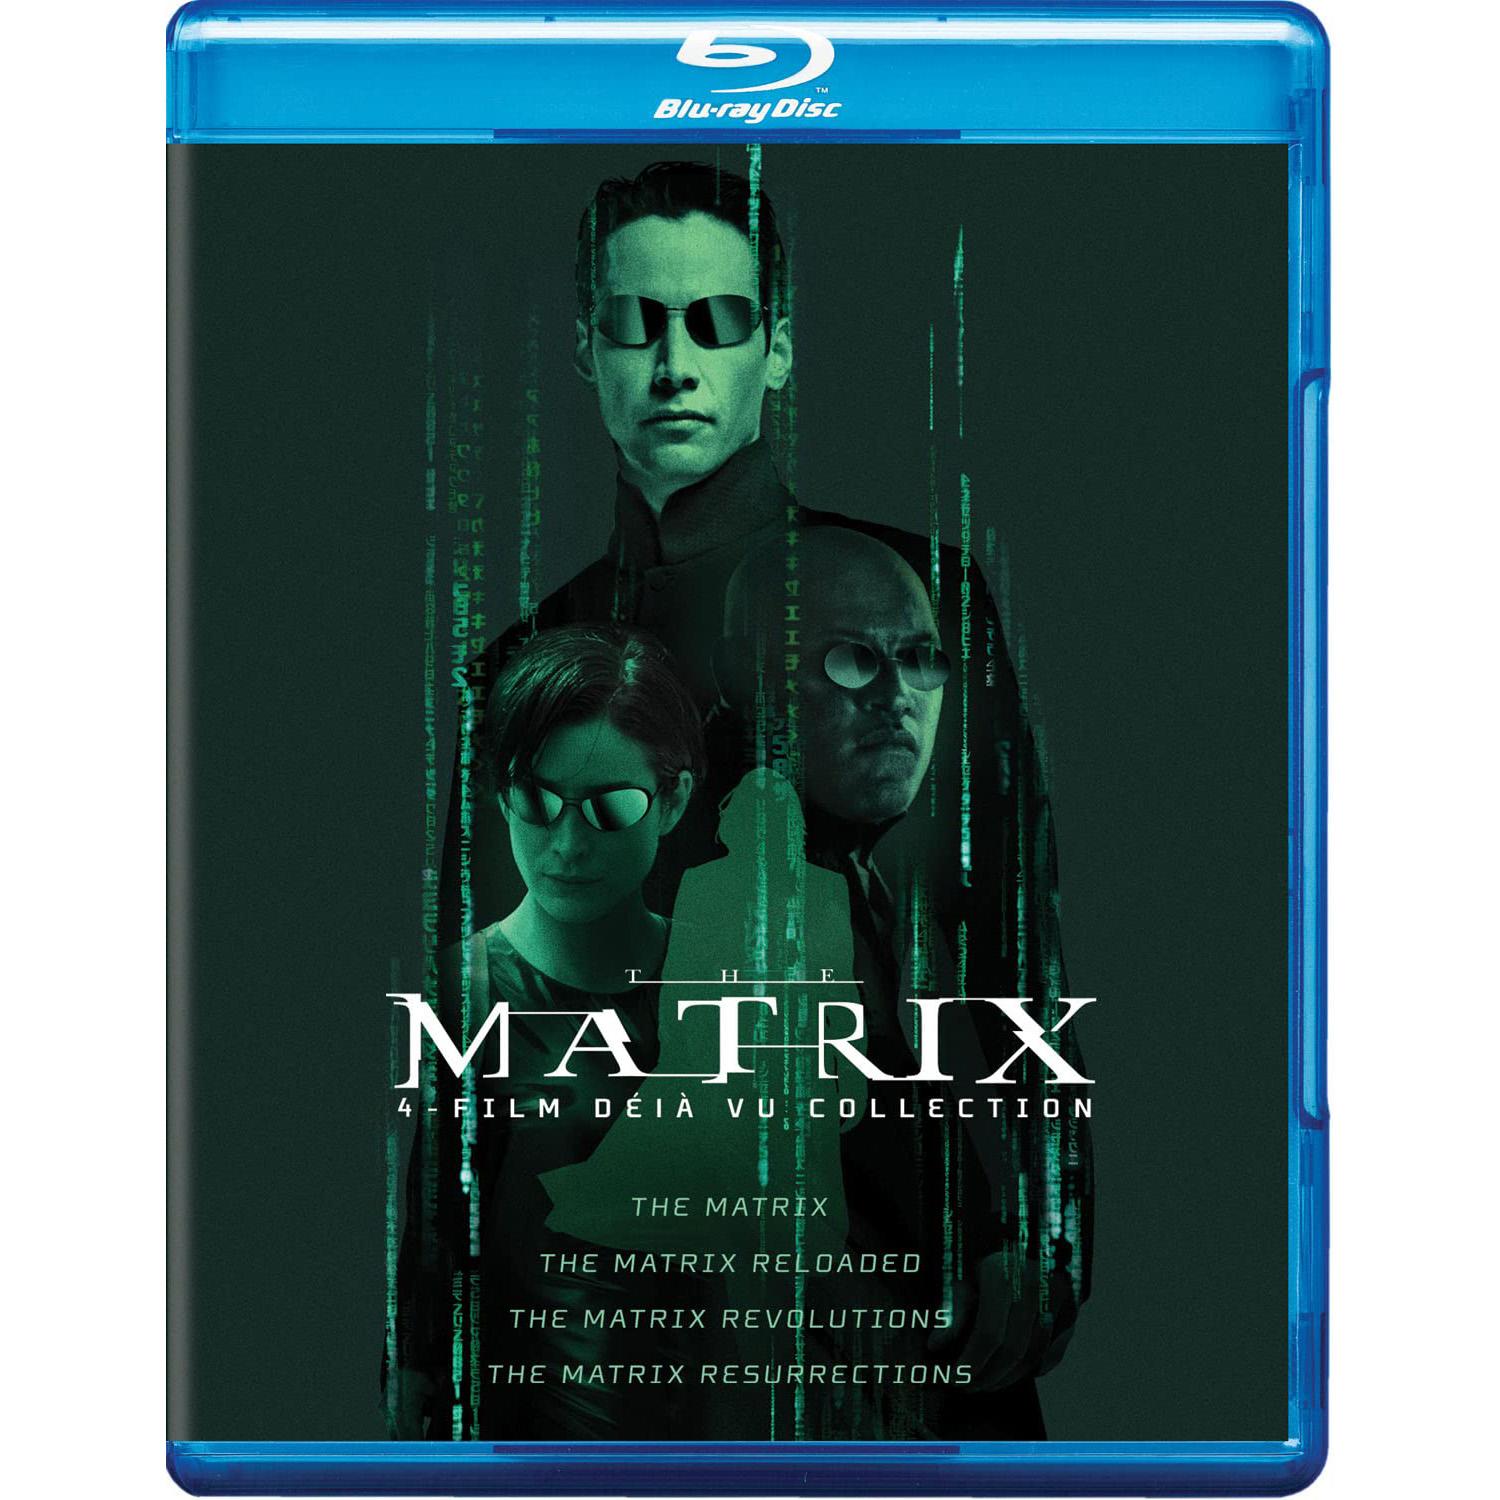 The Matrix 4-Film Deja vu Collection Blu-ray for $14.99